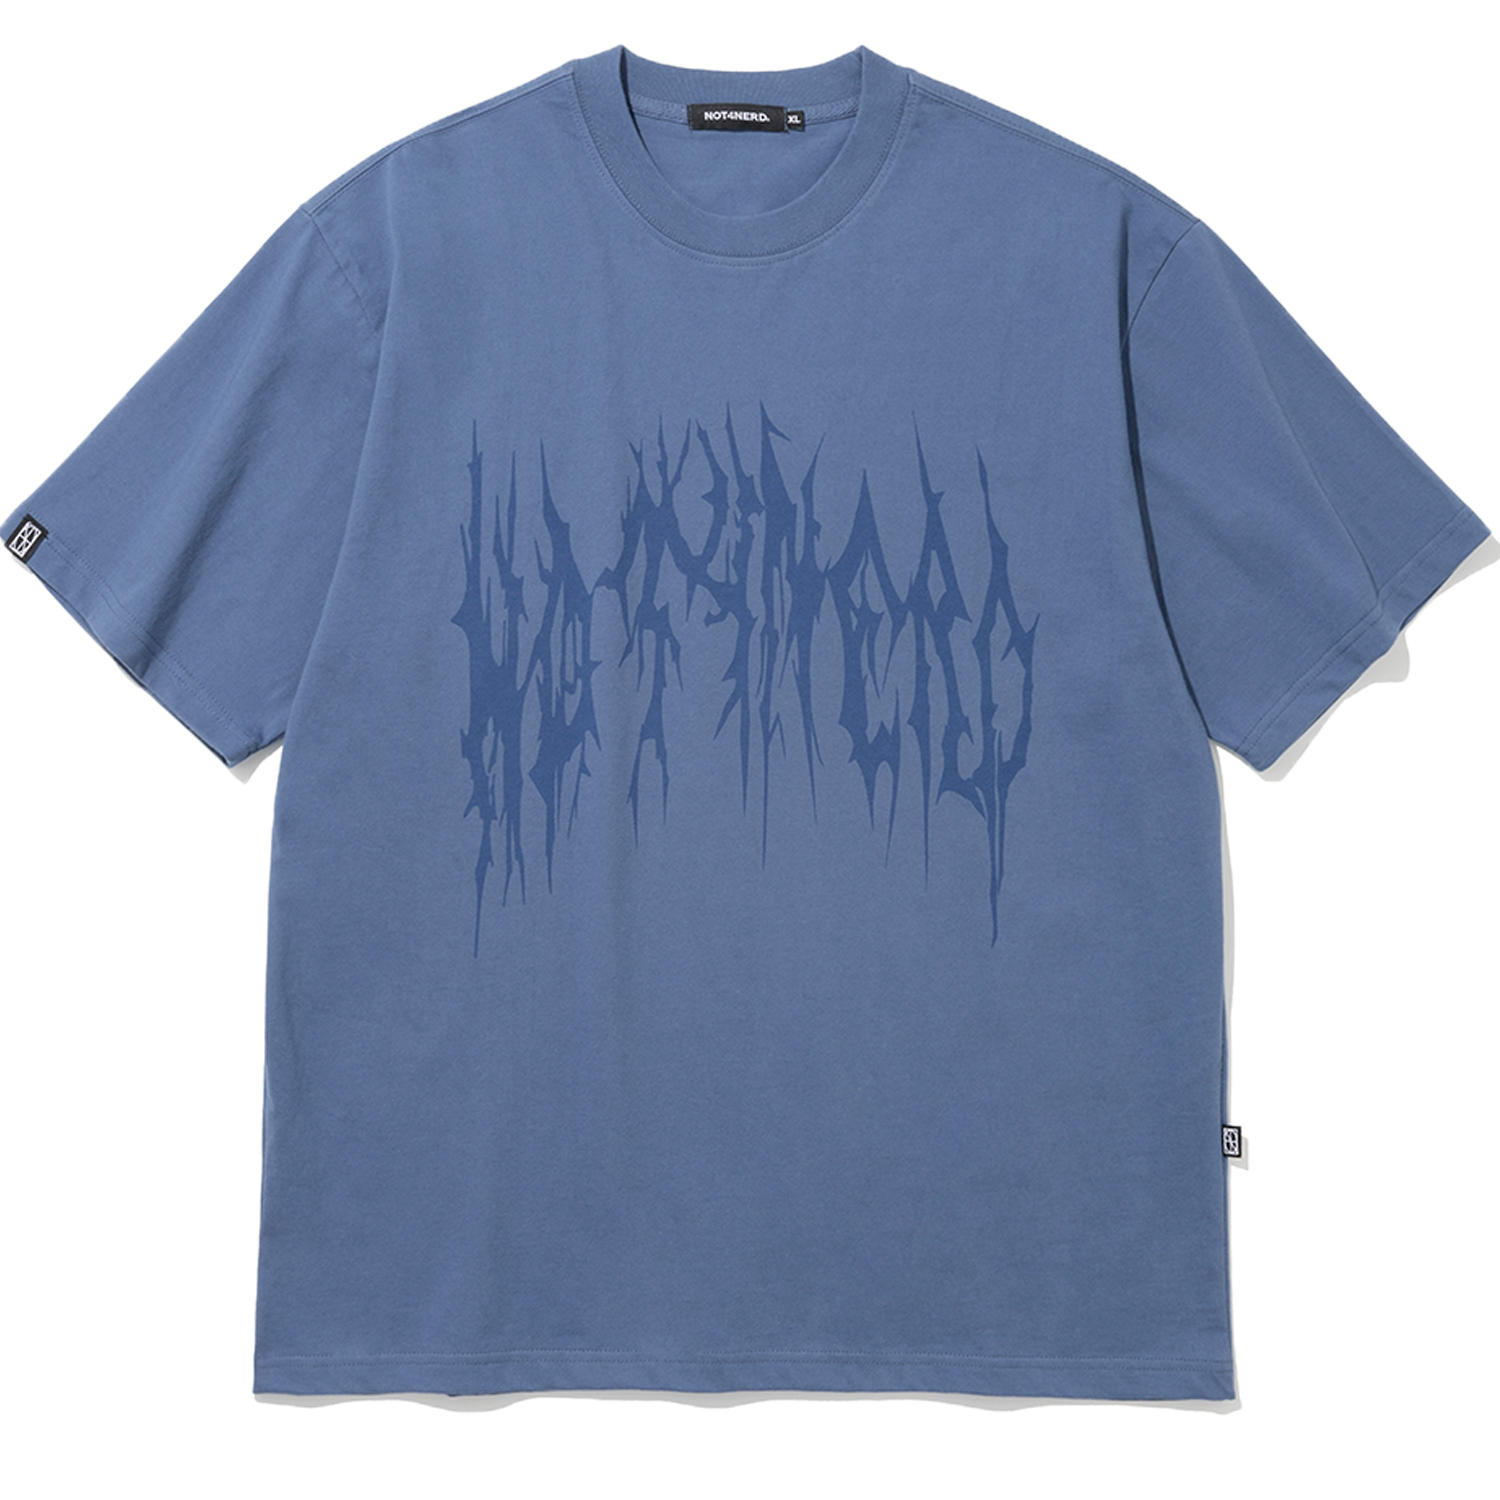 Pointed Logo T-Shirts - Blue,NOT4NERD